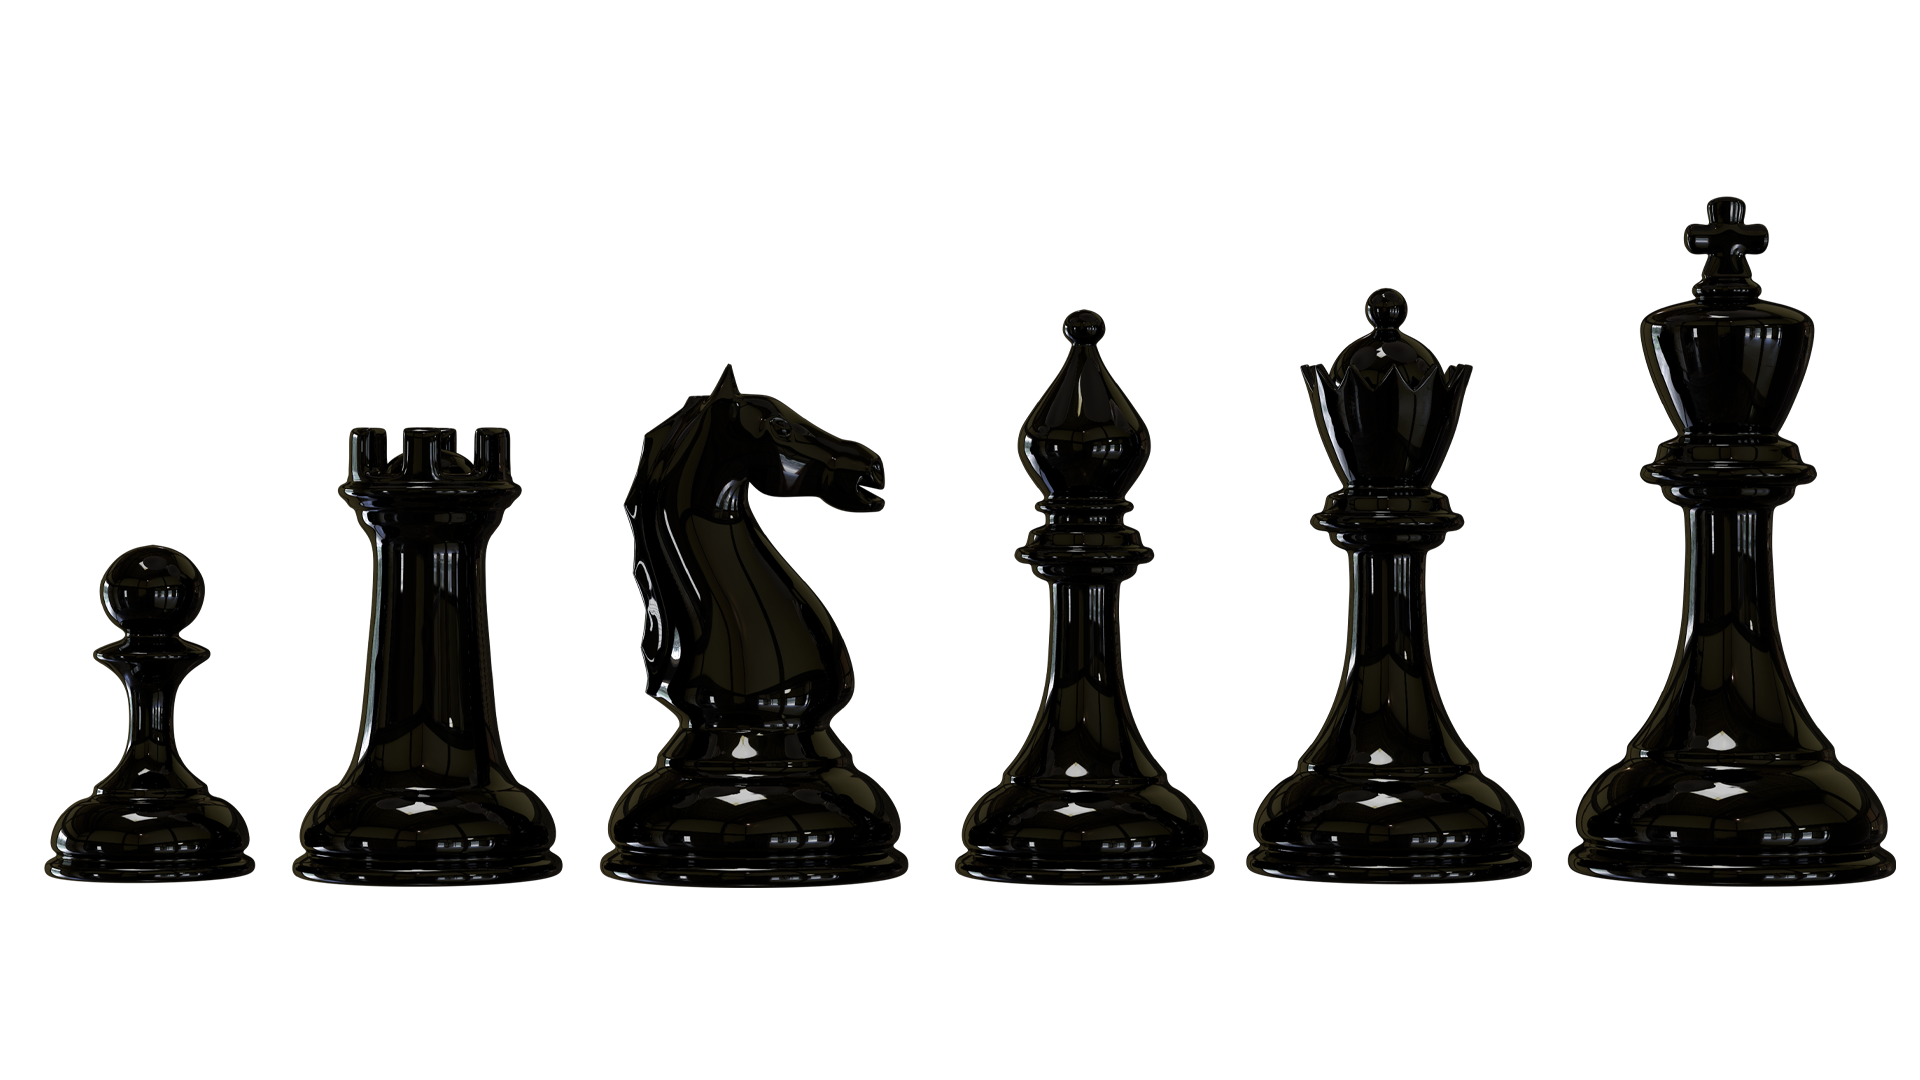 chess piece that moves diagonally